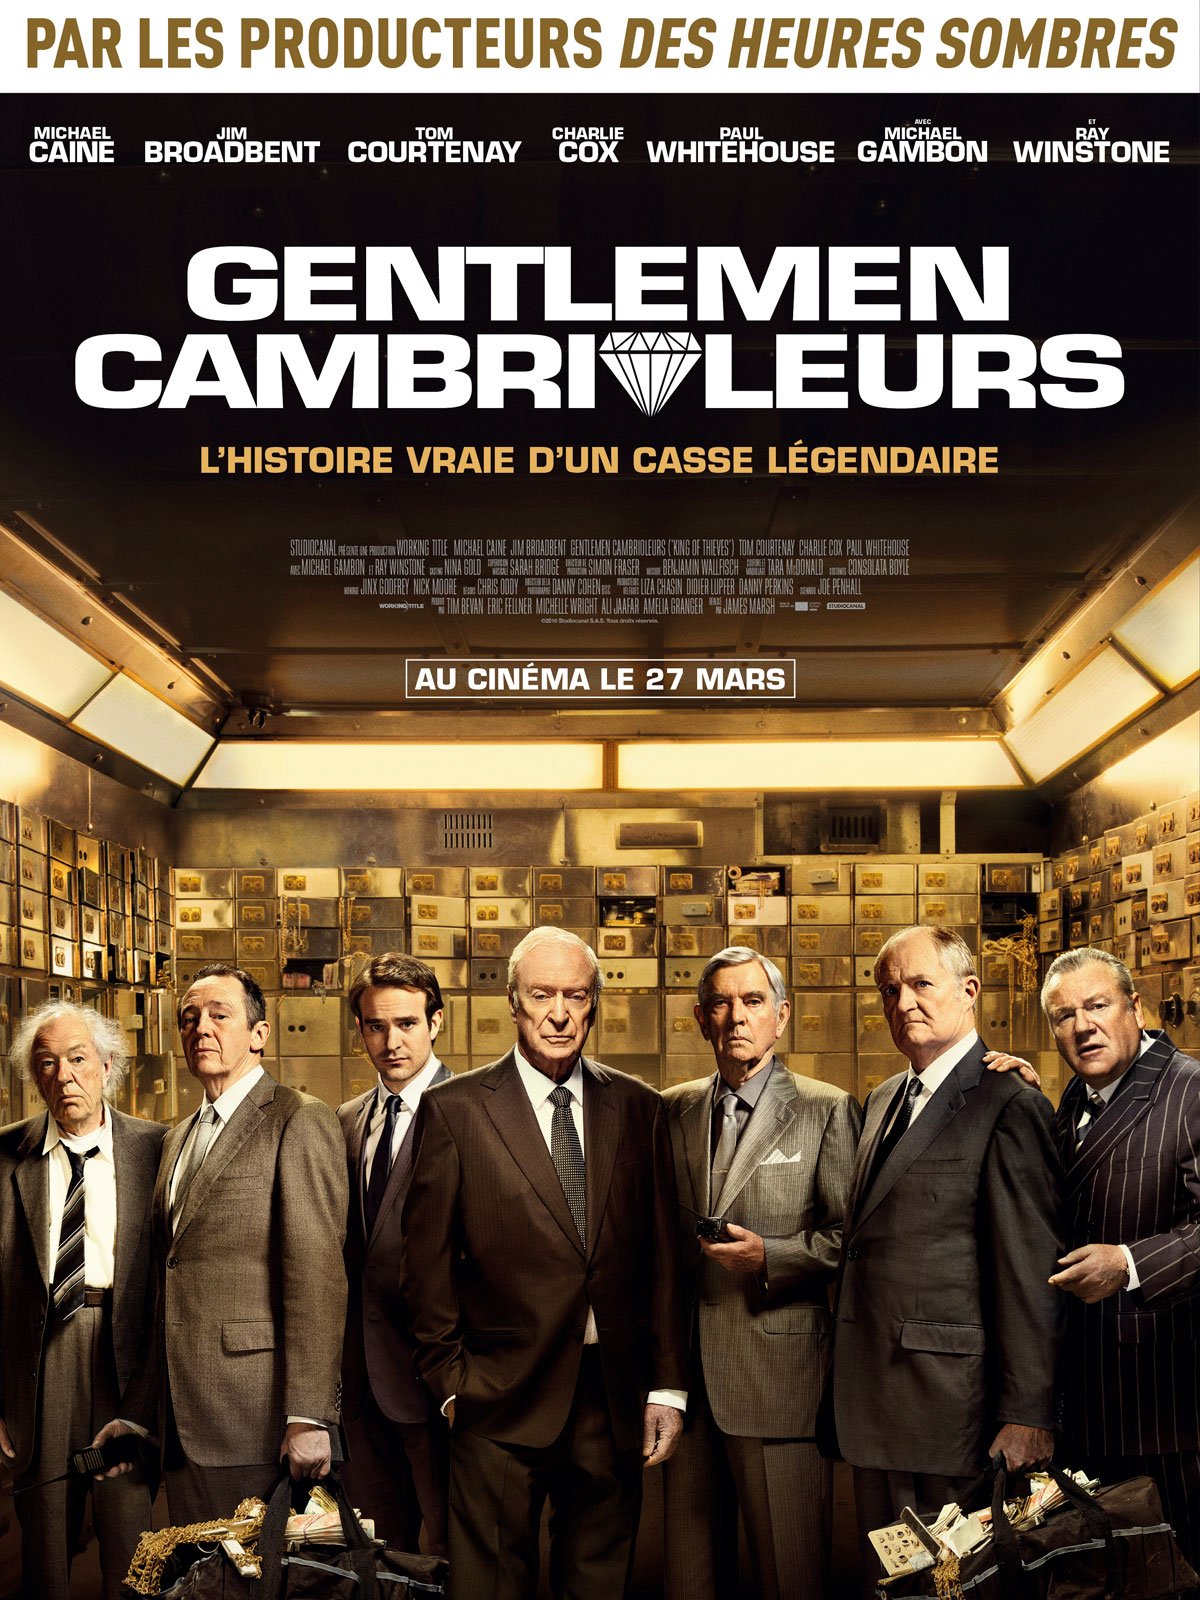 Gentlemen cambrioleurs - film 2018 - AlloCiné1200 x 1600